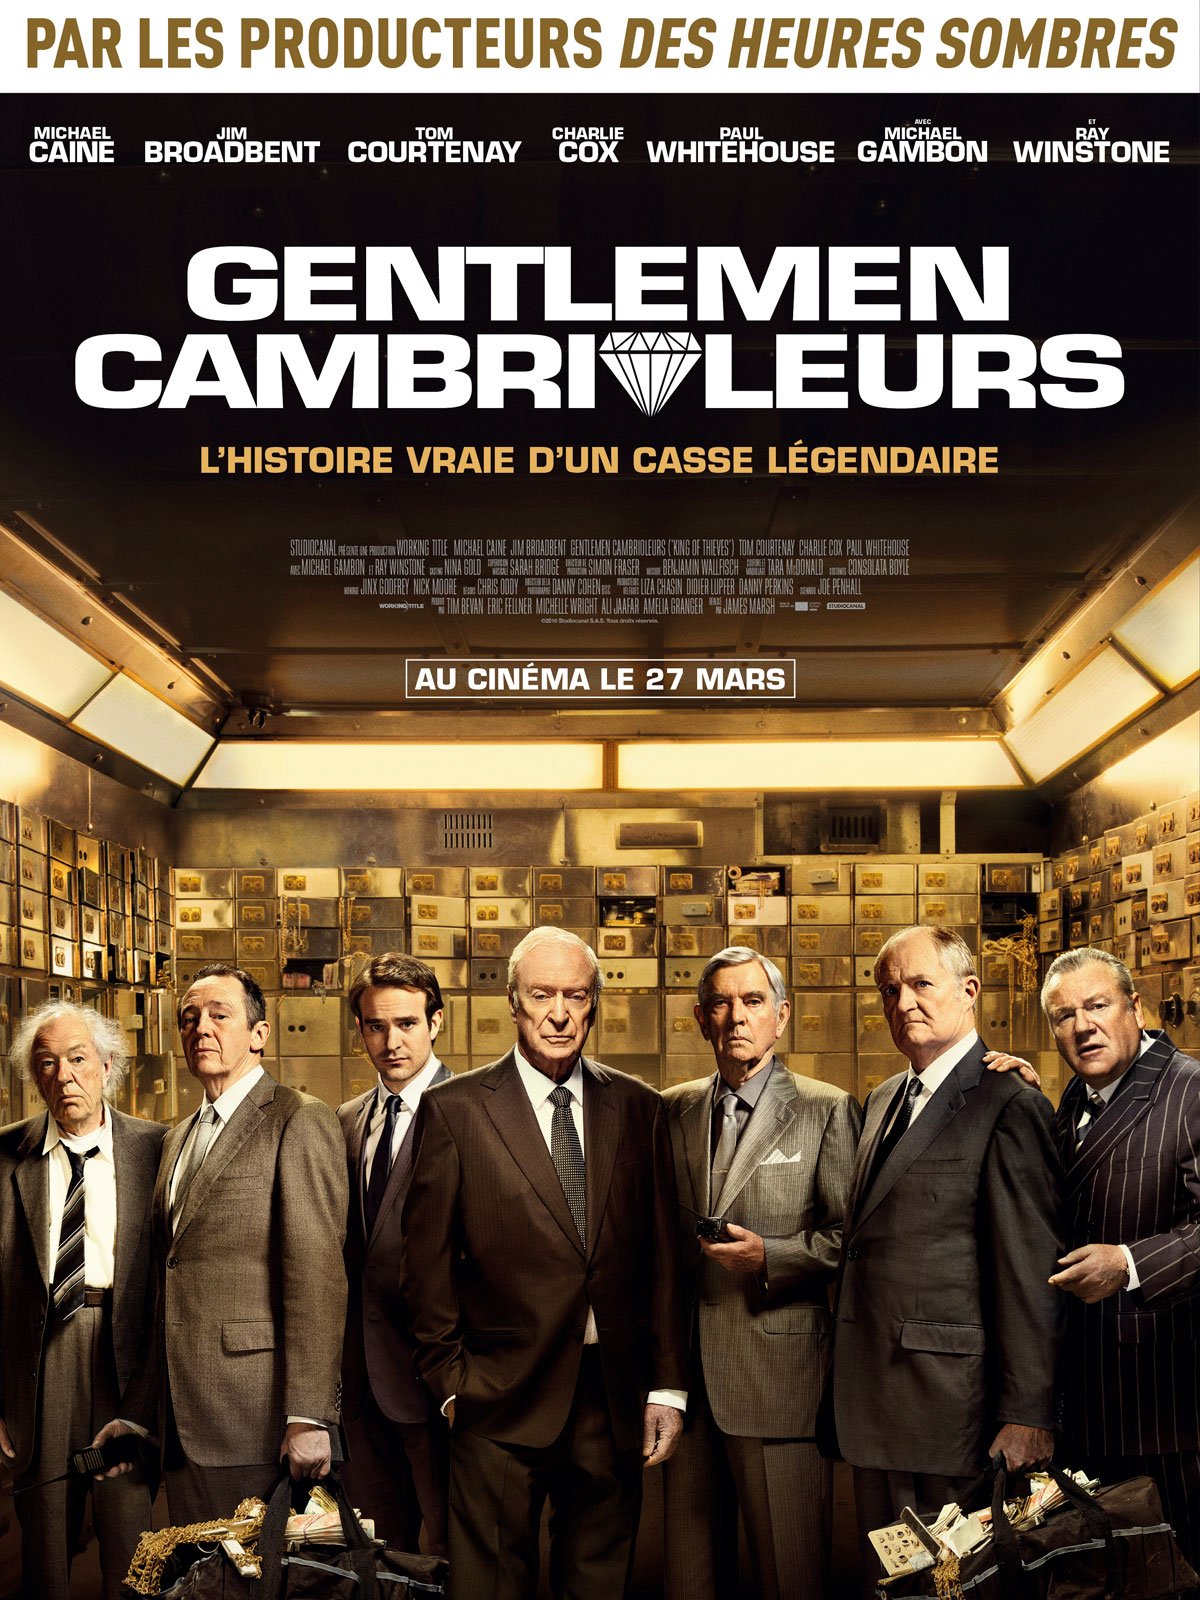 Gentlemen cambrioleurs - film 2018 - AlloCiné1200 x 1600